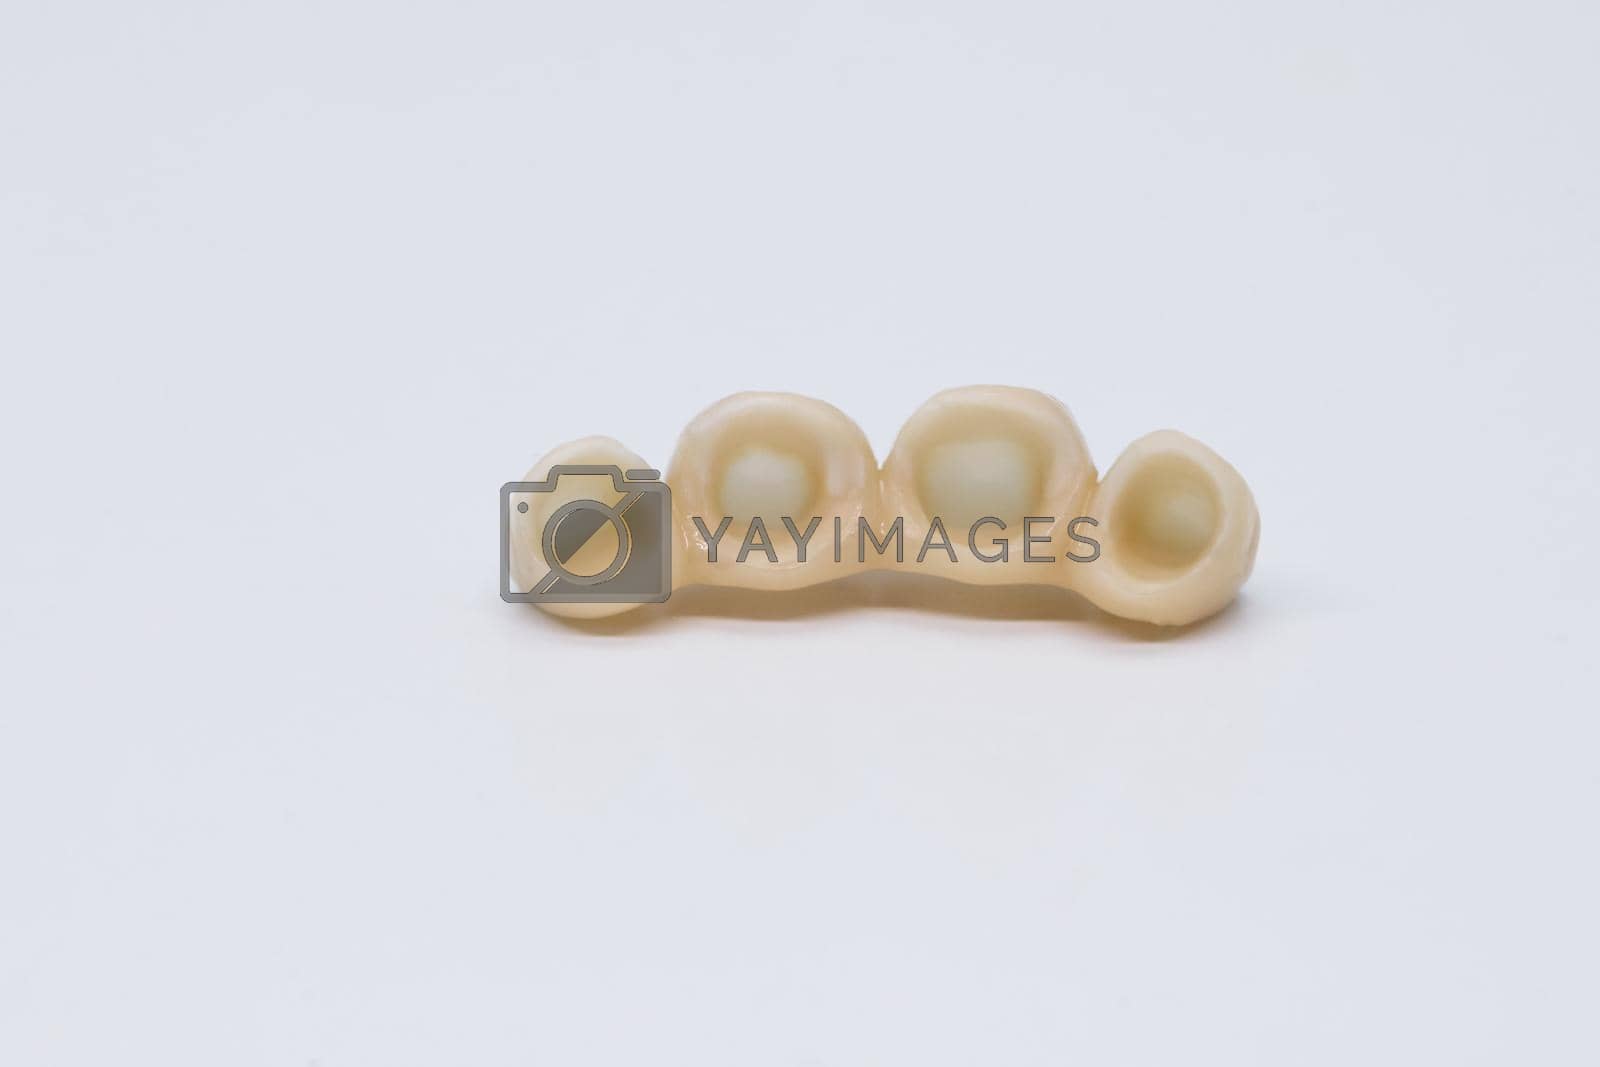 Metal free ceramic dental crowns. Dental ceramic bridge on isolated wite background.